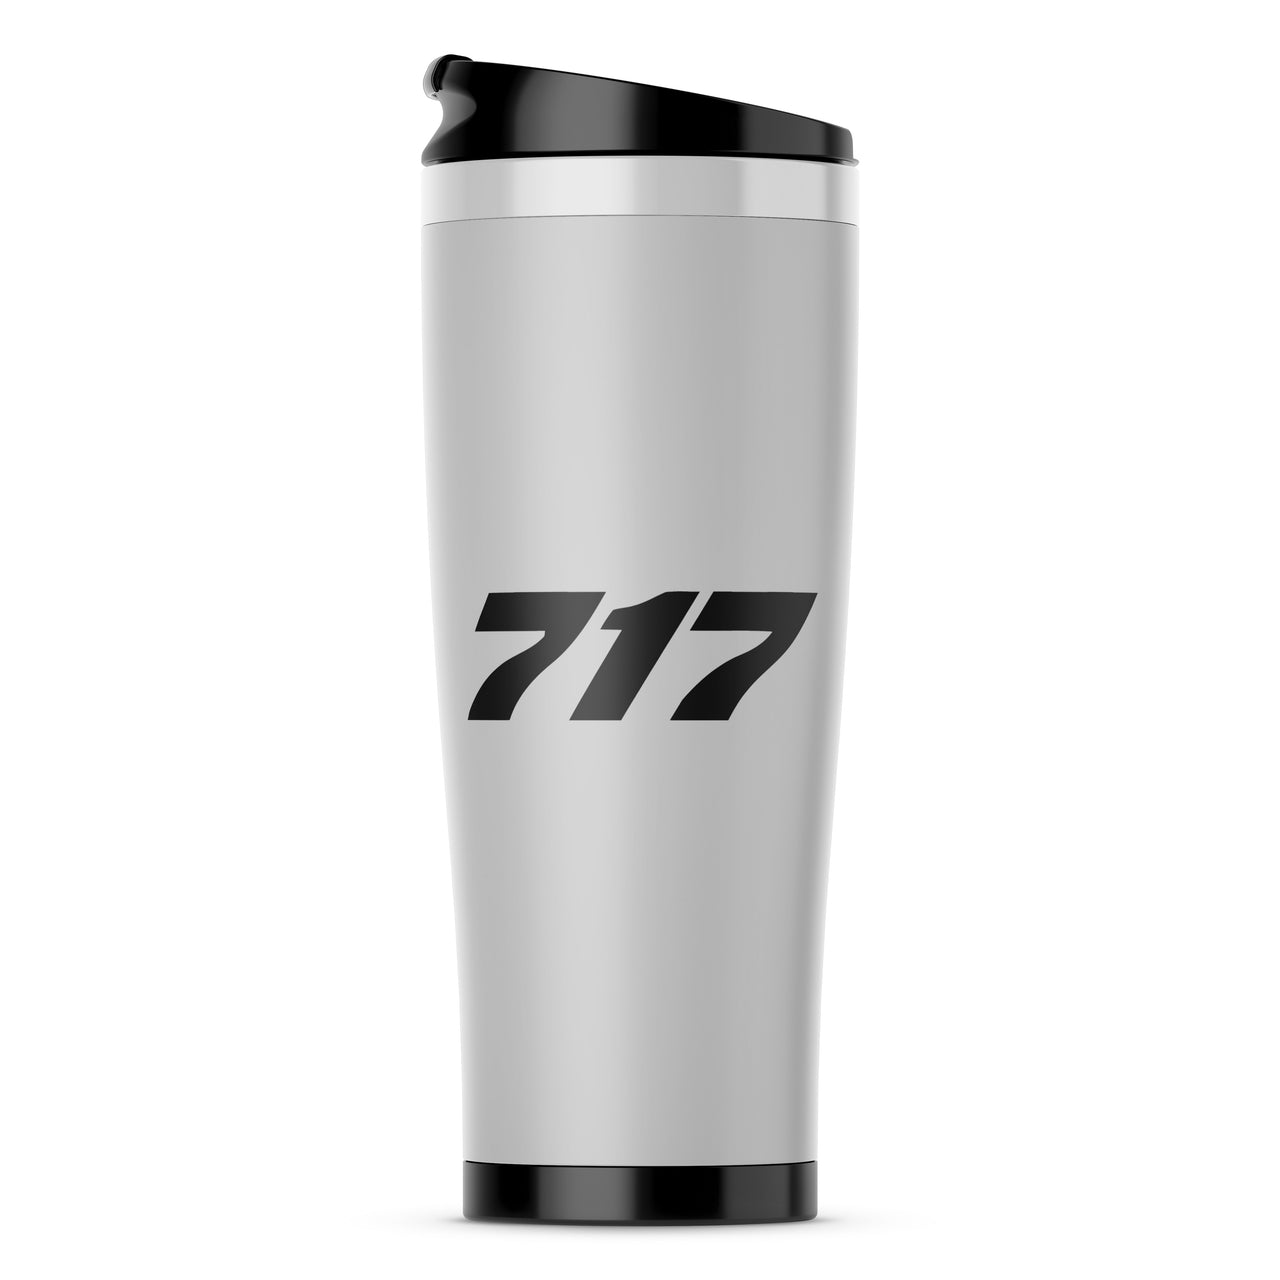 717 Flat Text Designed Travel Mugs